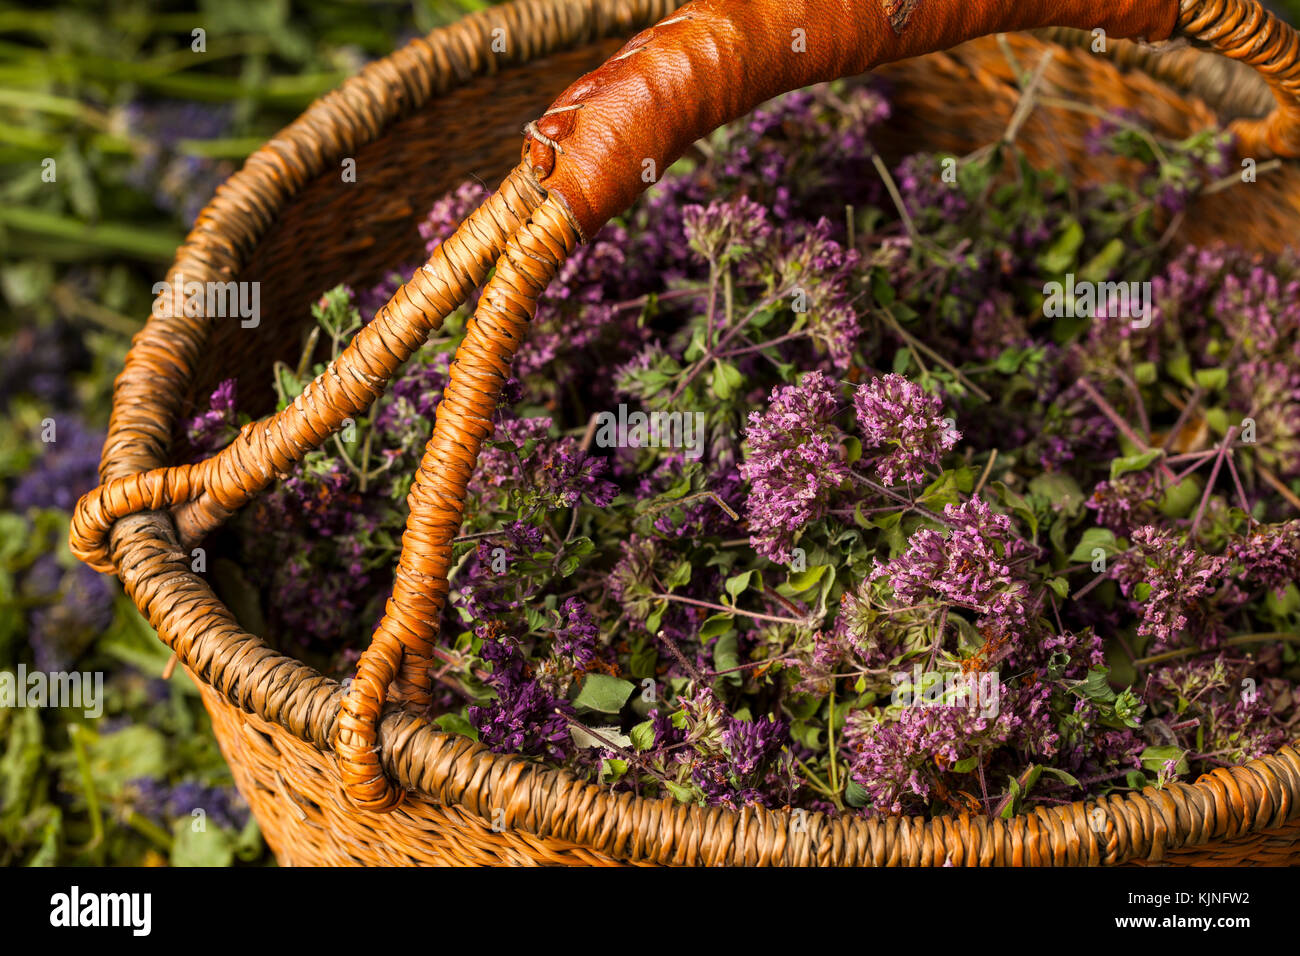 Geerntet Origanum vulgare Blumen. Bereits getrocknet Tee zu machen. Stockfoto